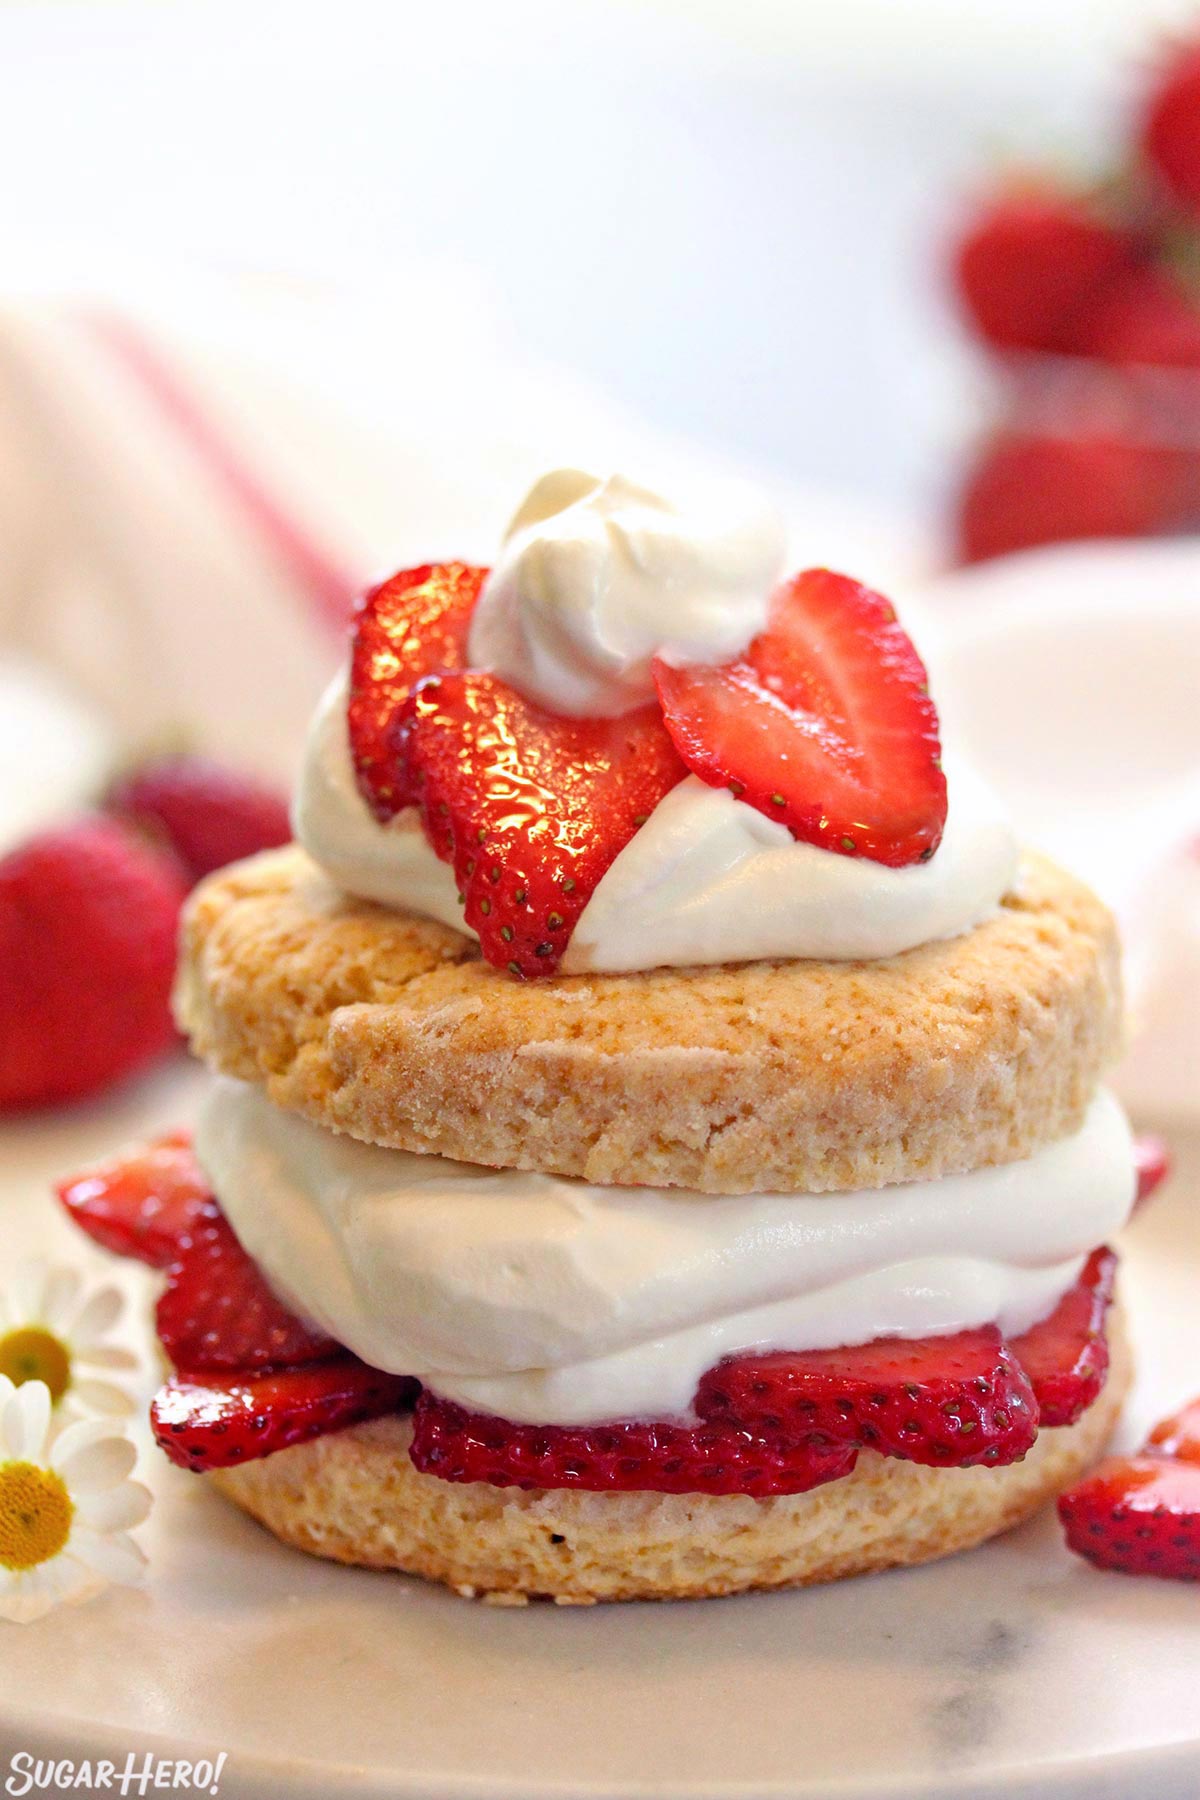 Grown-Up Strawberry Shortcake | From SugarHero.com